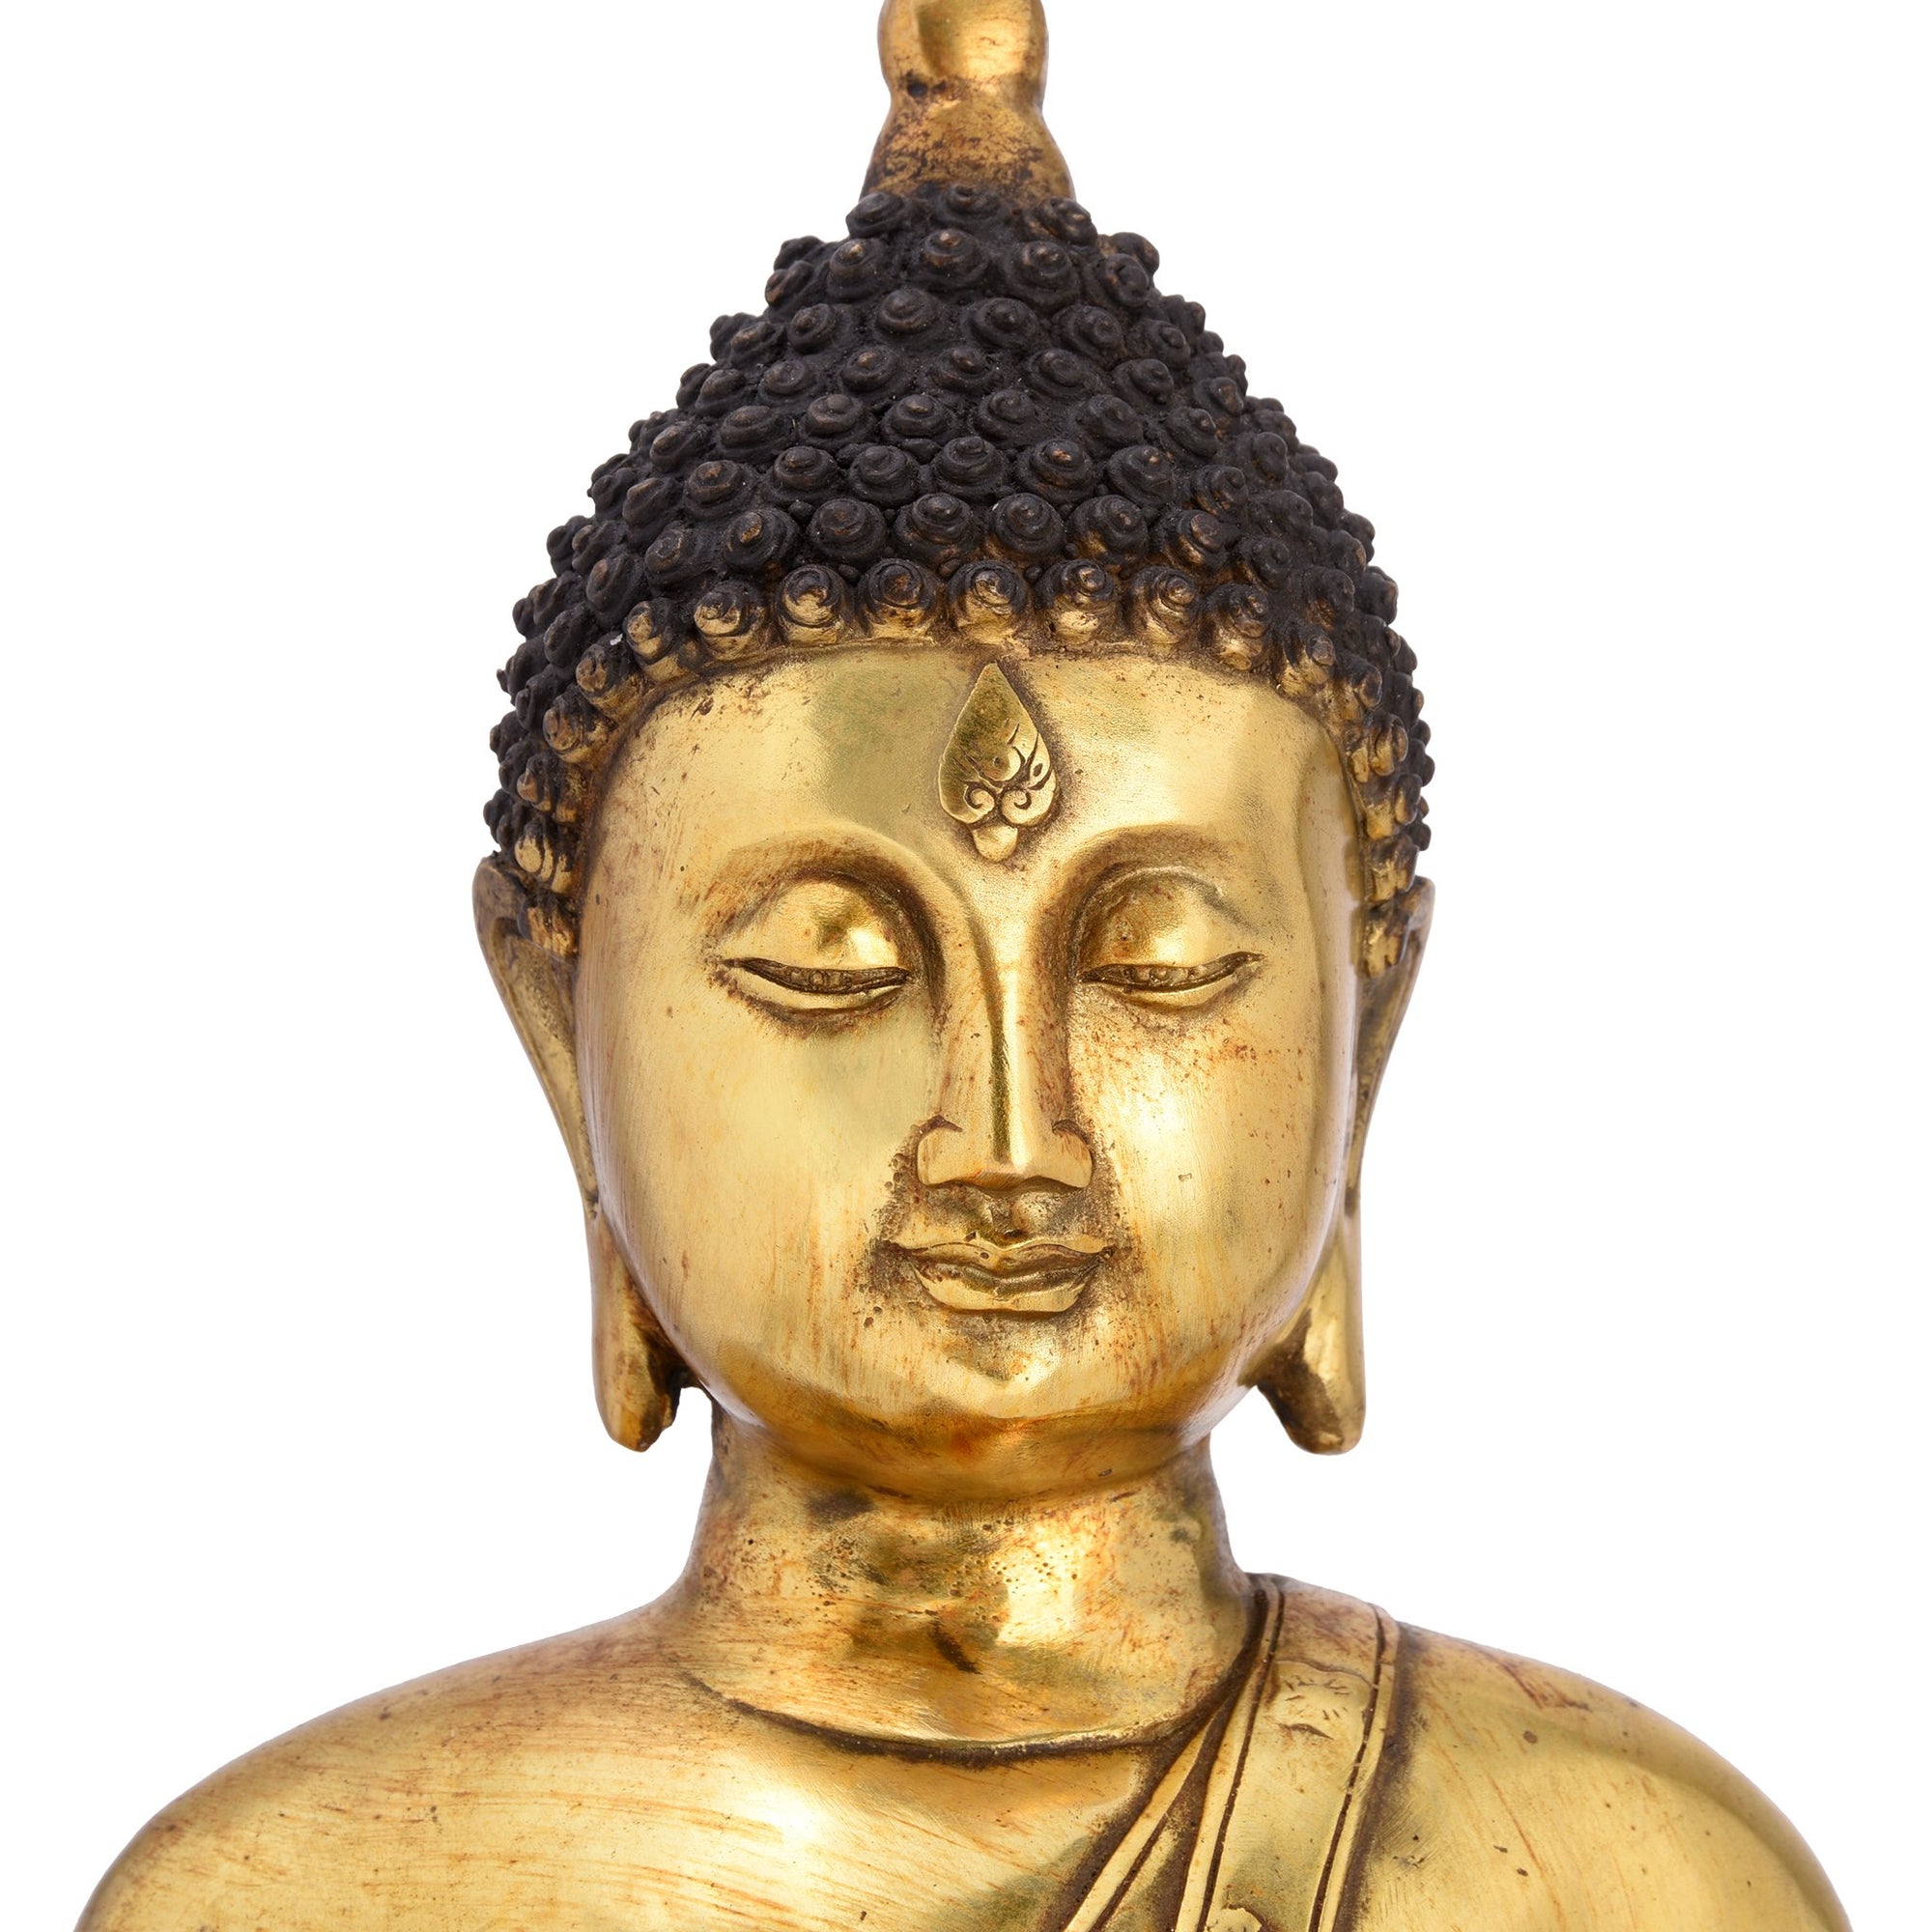 Cast Bronze Statue Of Buddha - Dhyana Mudra Pose | Indigo Antiques